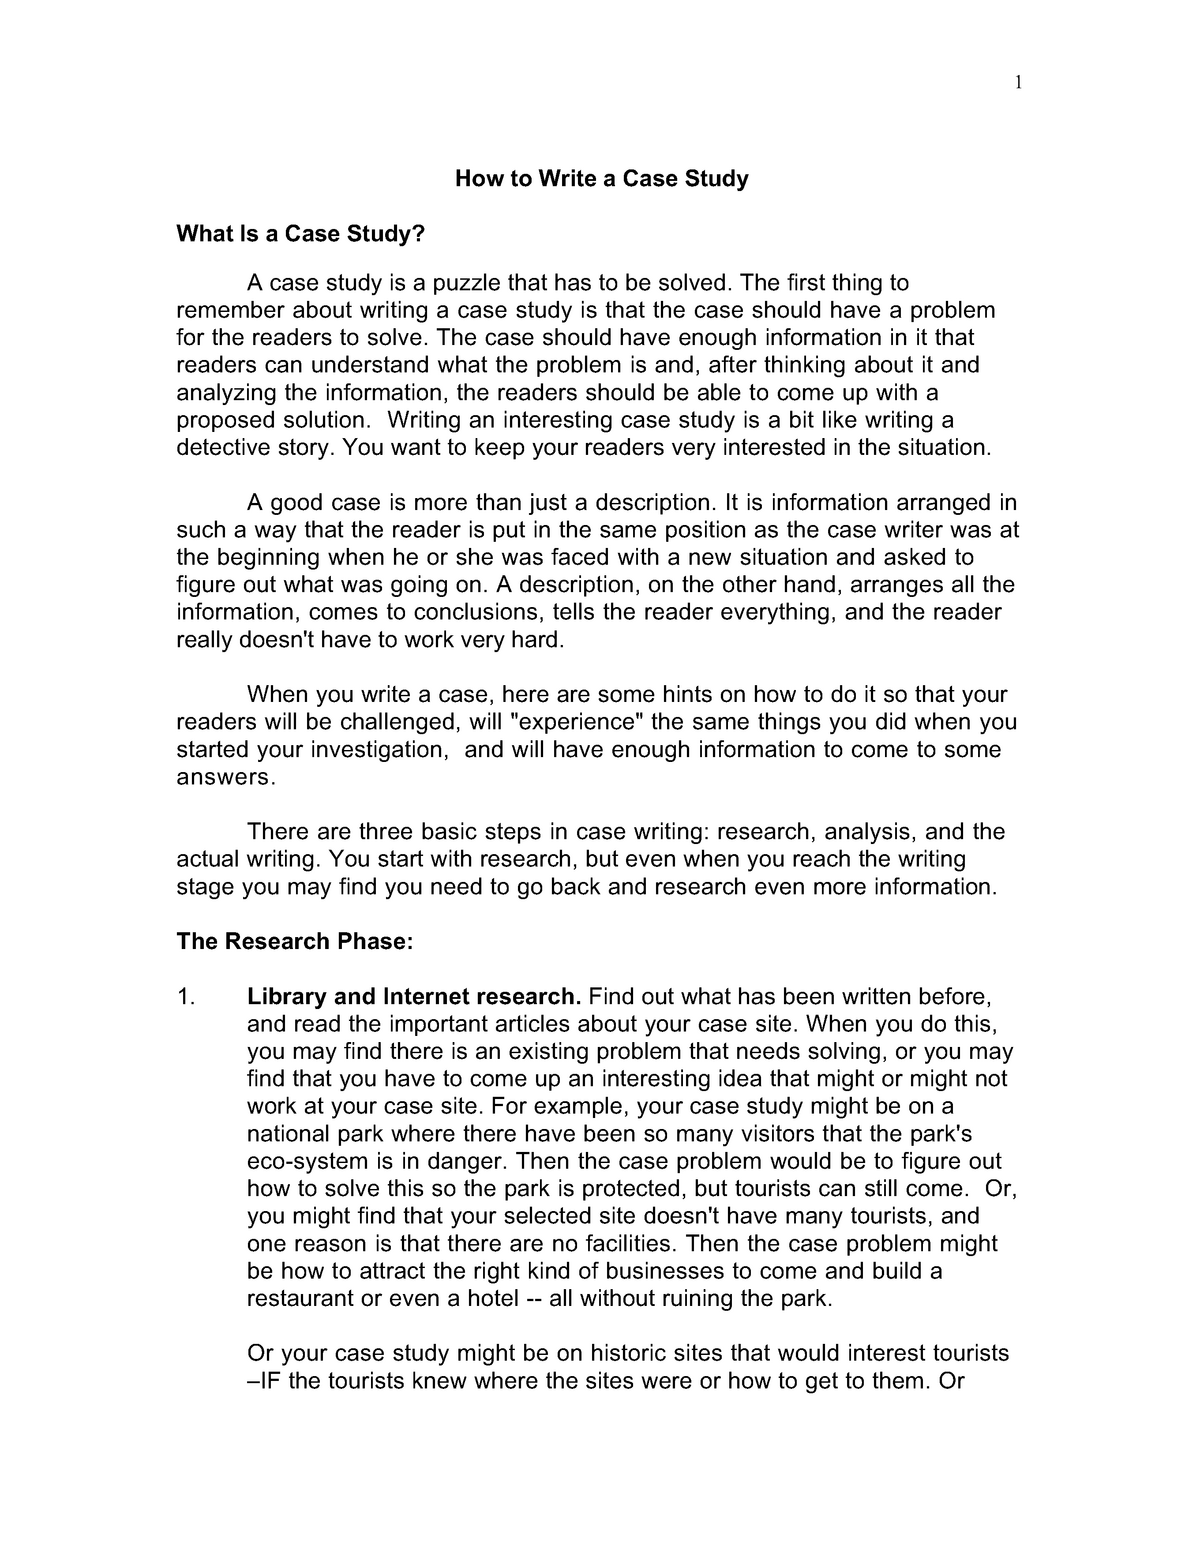 vikas and tapas case study answers pdf